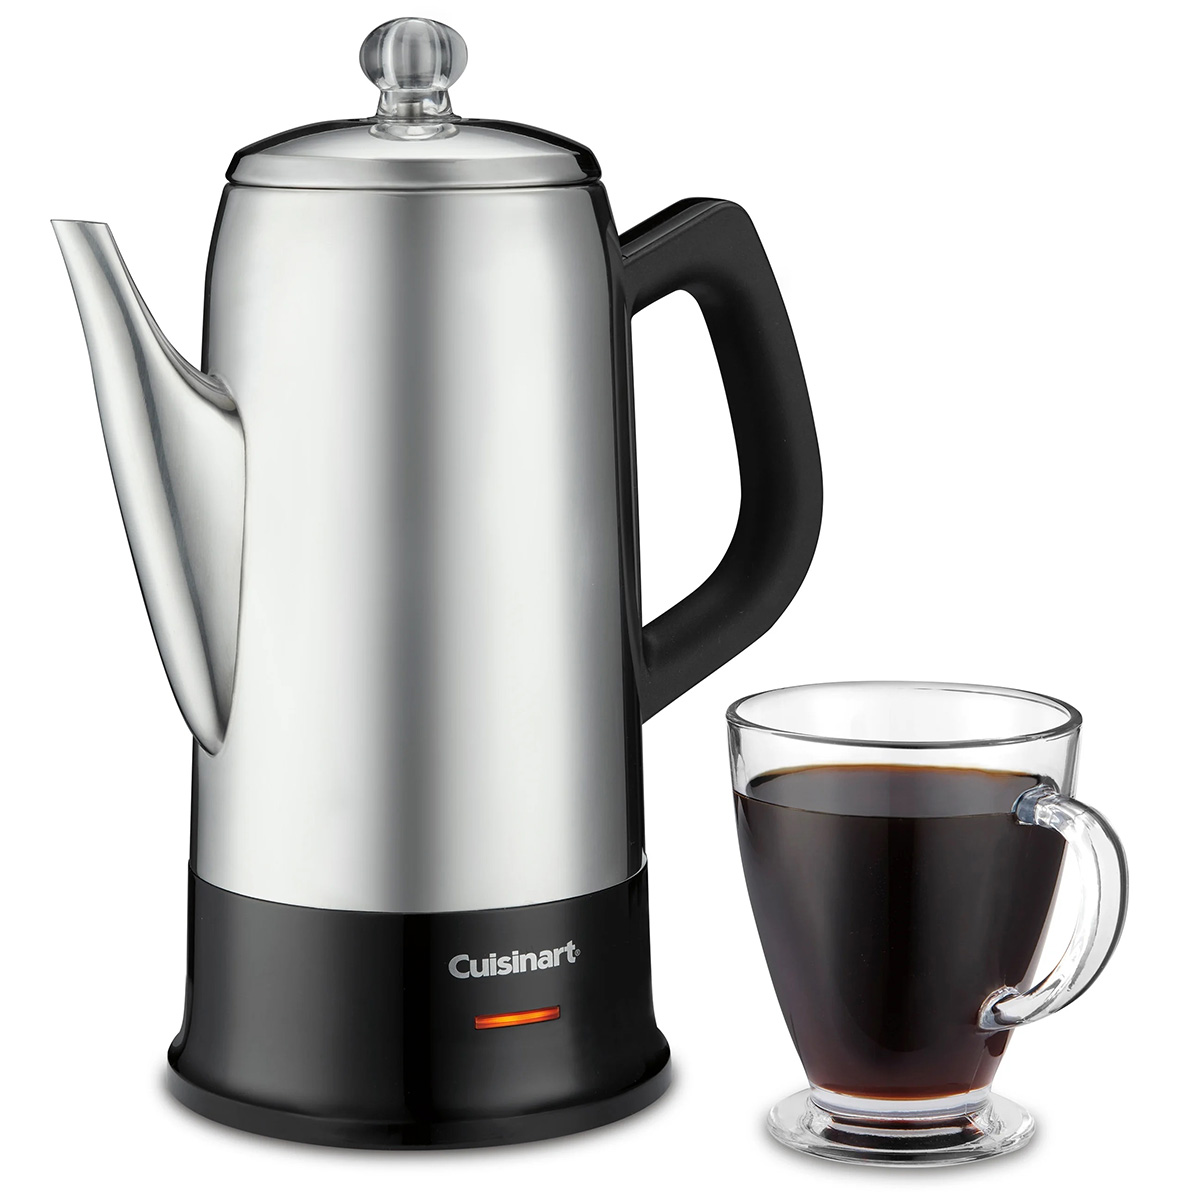 Cuisinart(R) 12 Cup Percolator Coffeemaker